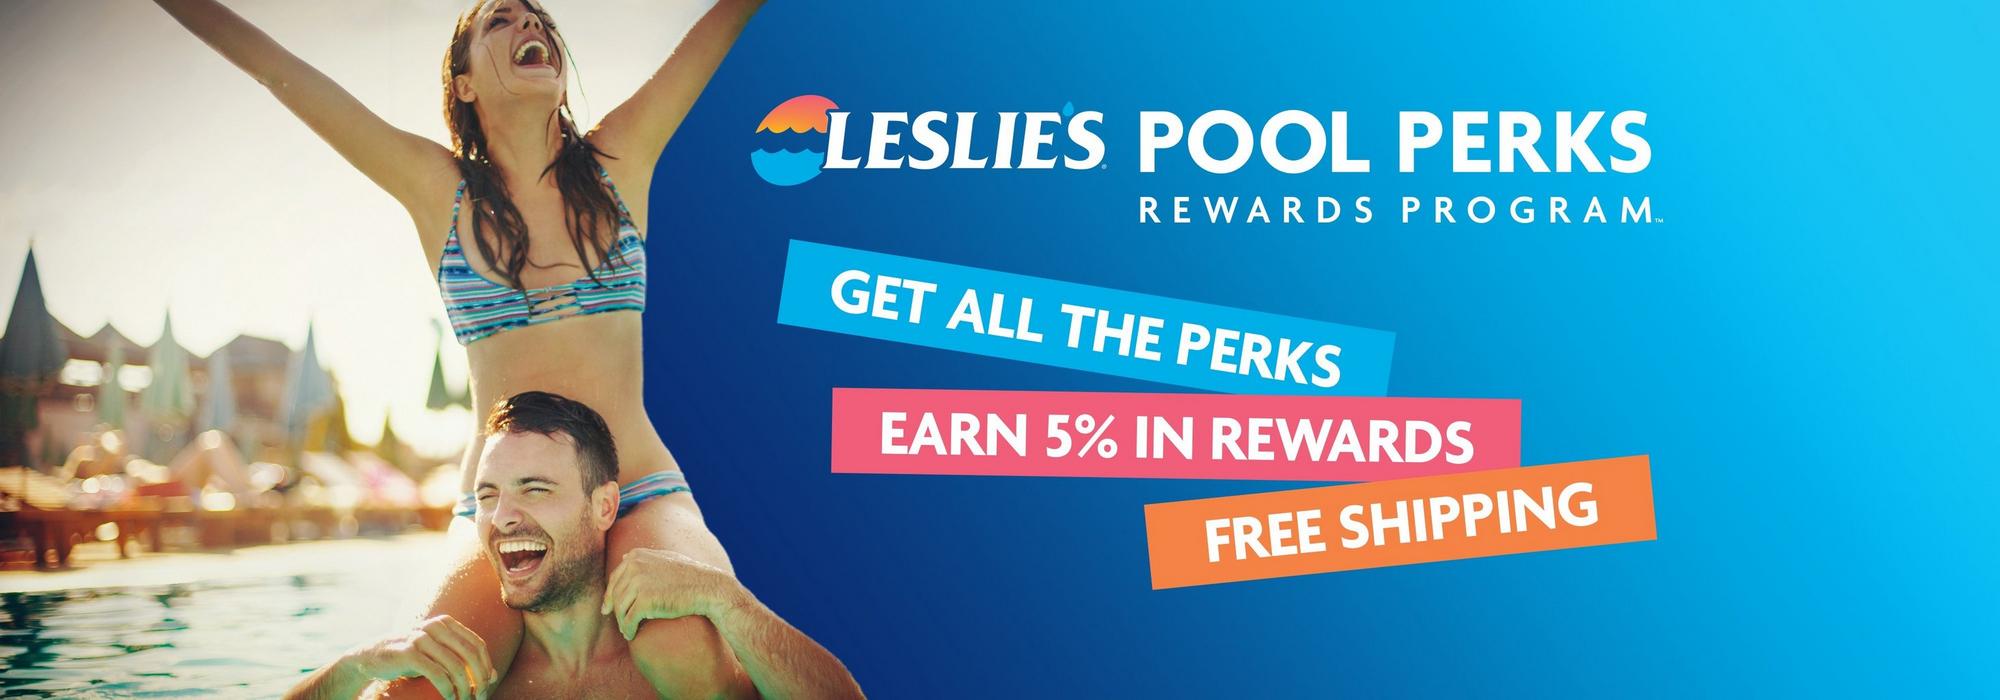 A large image advertising Leslies Pool Perks rewards program.